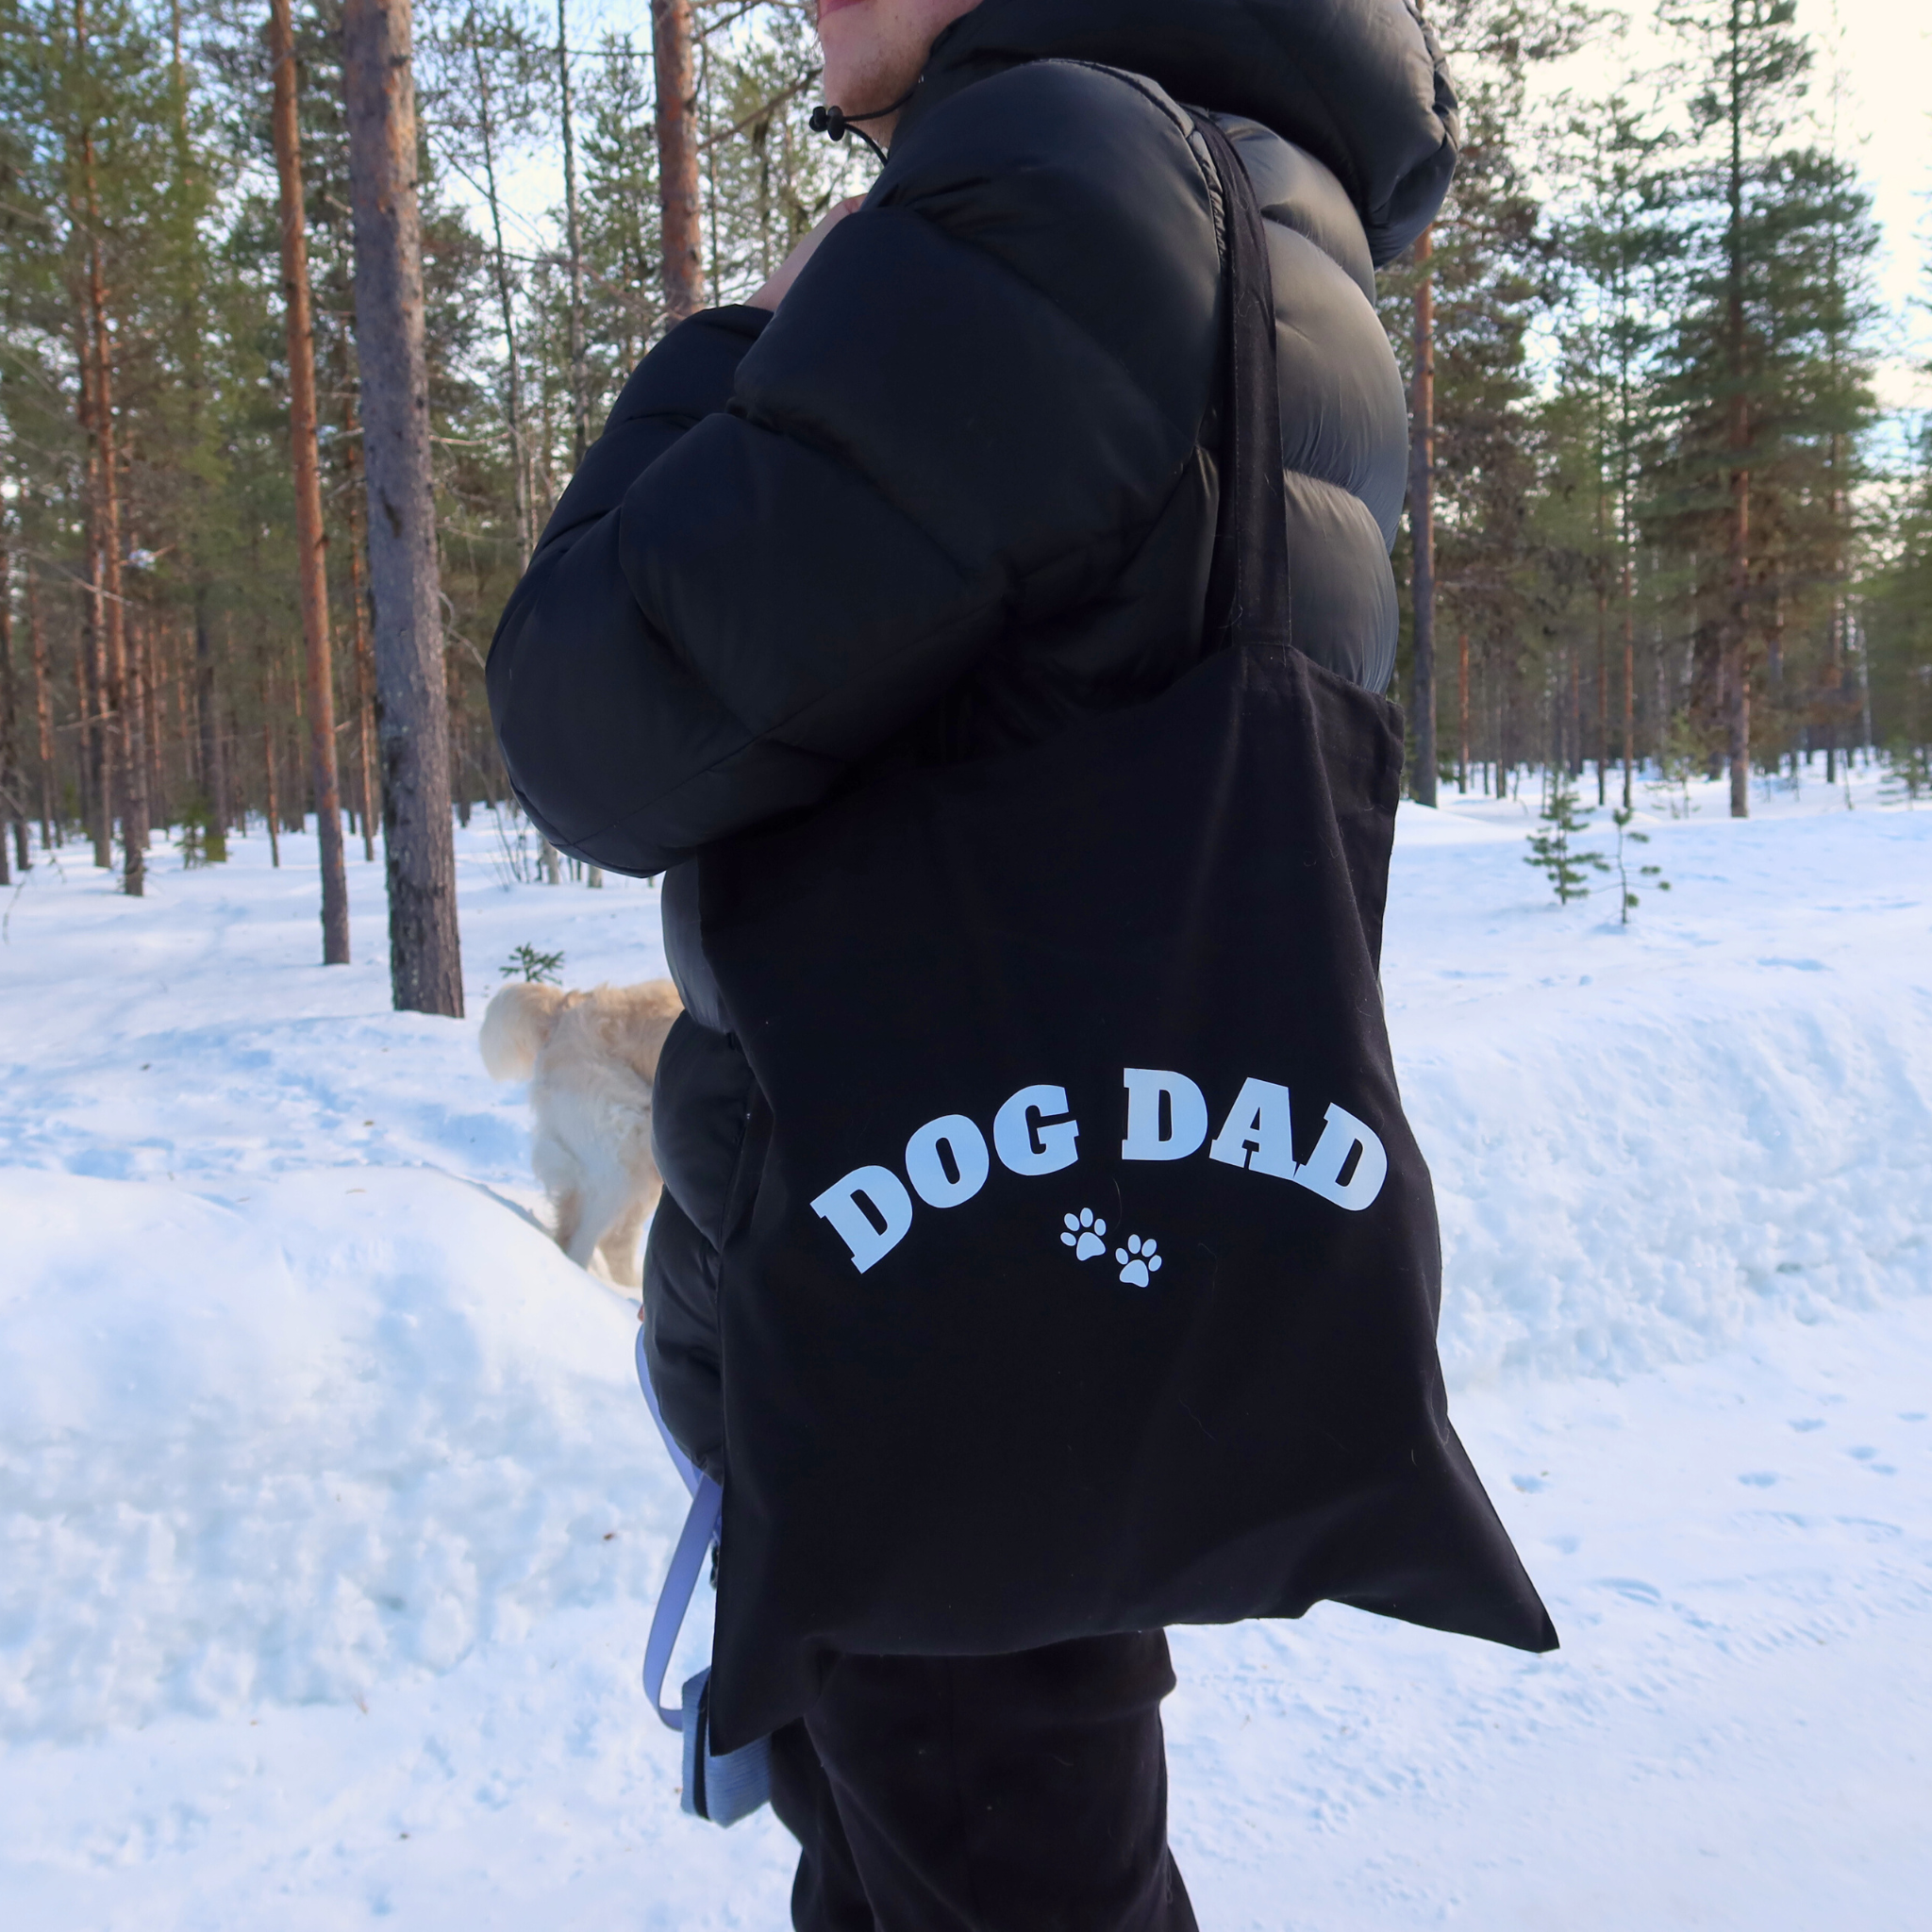 'Dog dad' tote bag